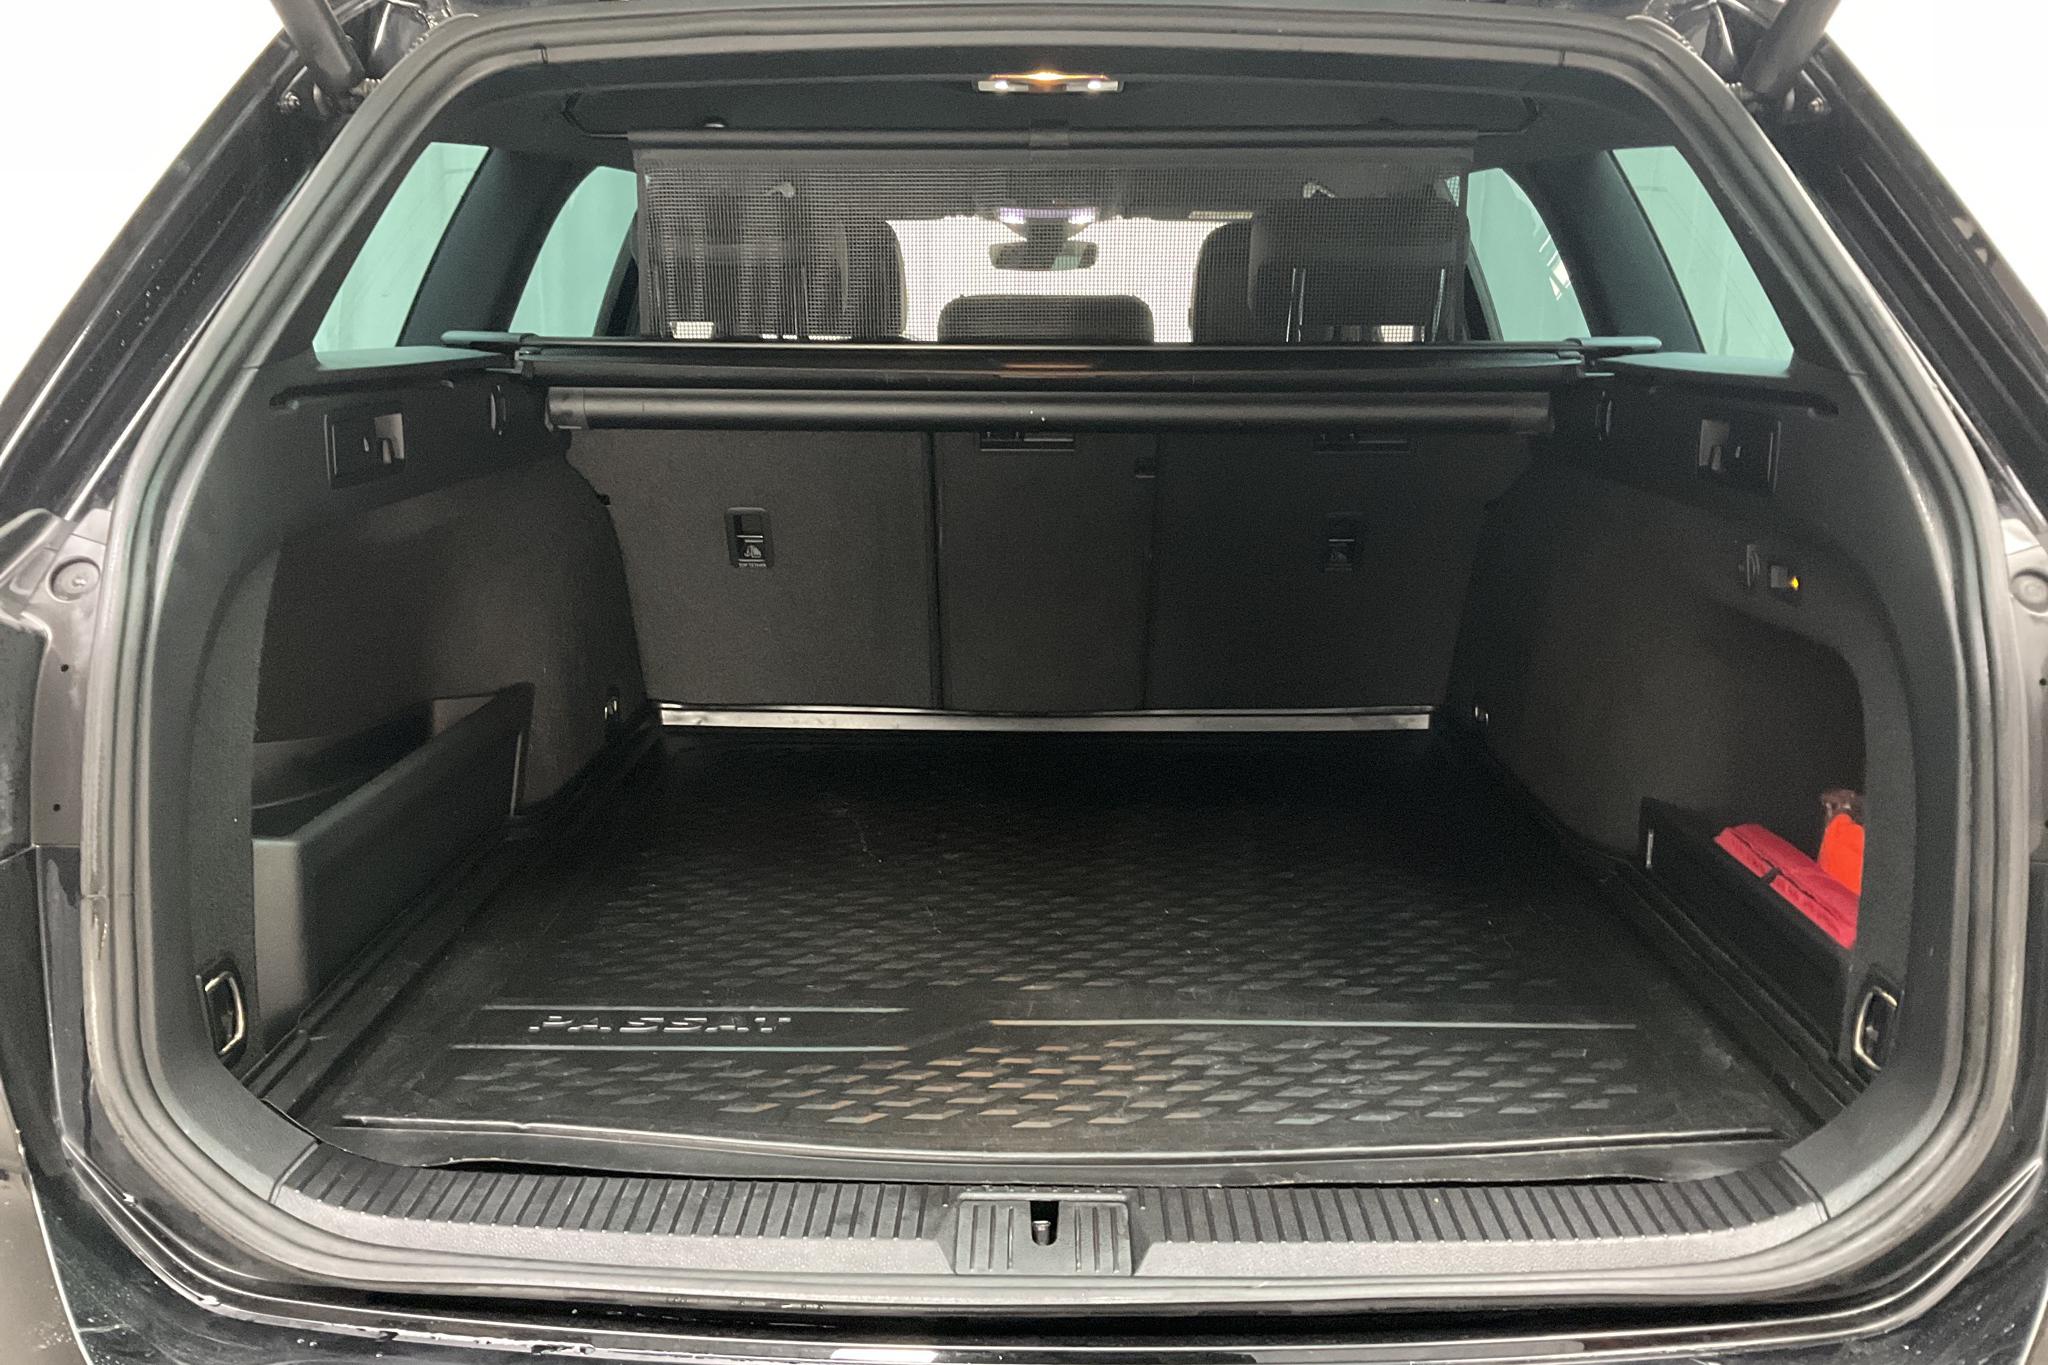 VW Passat Alltrack 2.0 TDI Sportscombi 4MOTION (240hk) - 72 070 km - Automatic - black - 2019